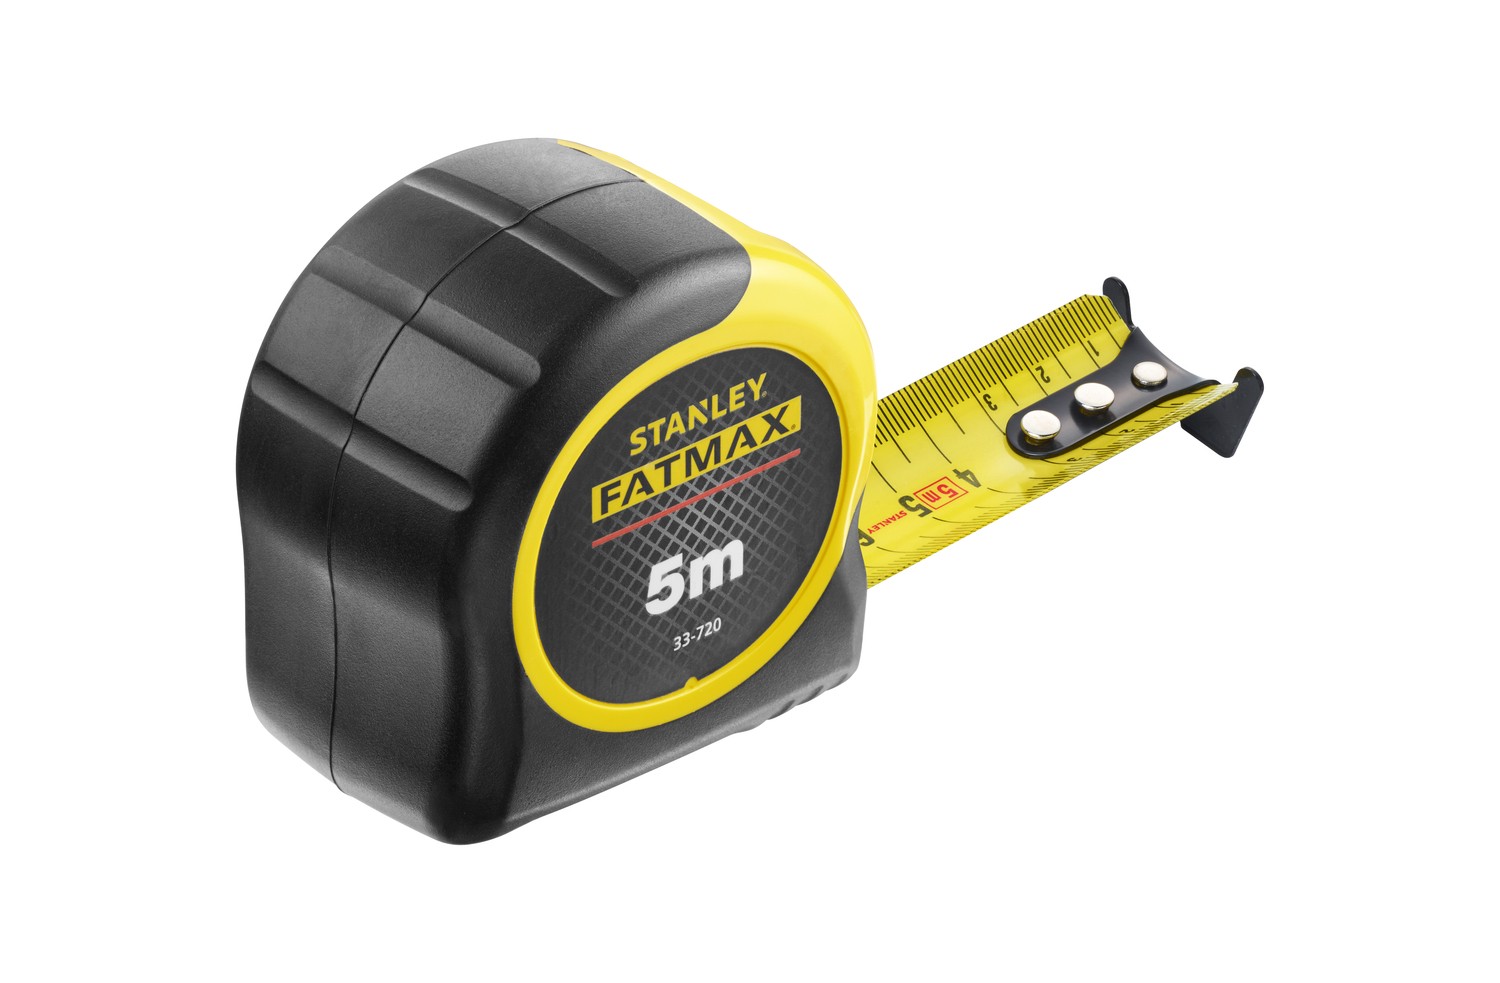 Flexómetro FatMax Pro 32mm Stanley